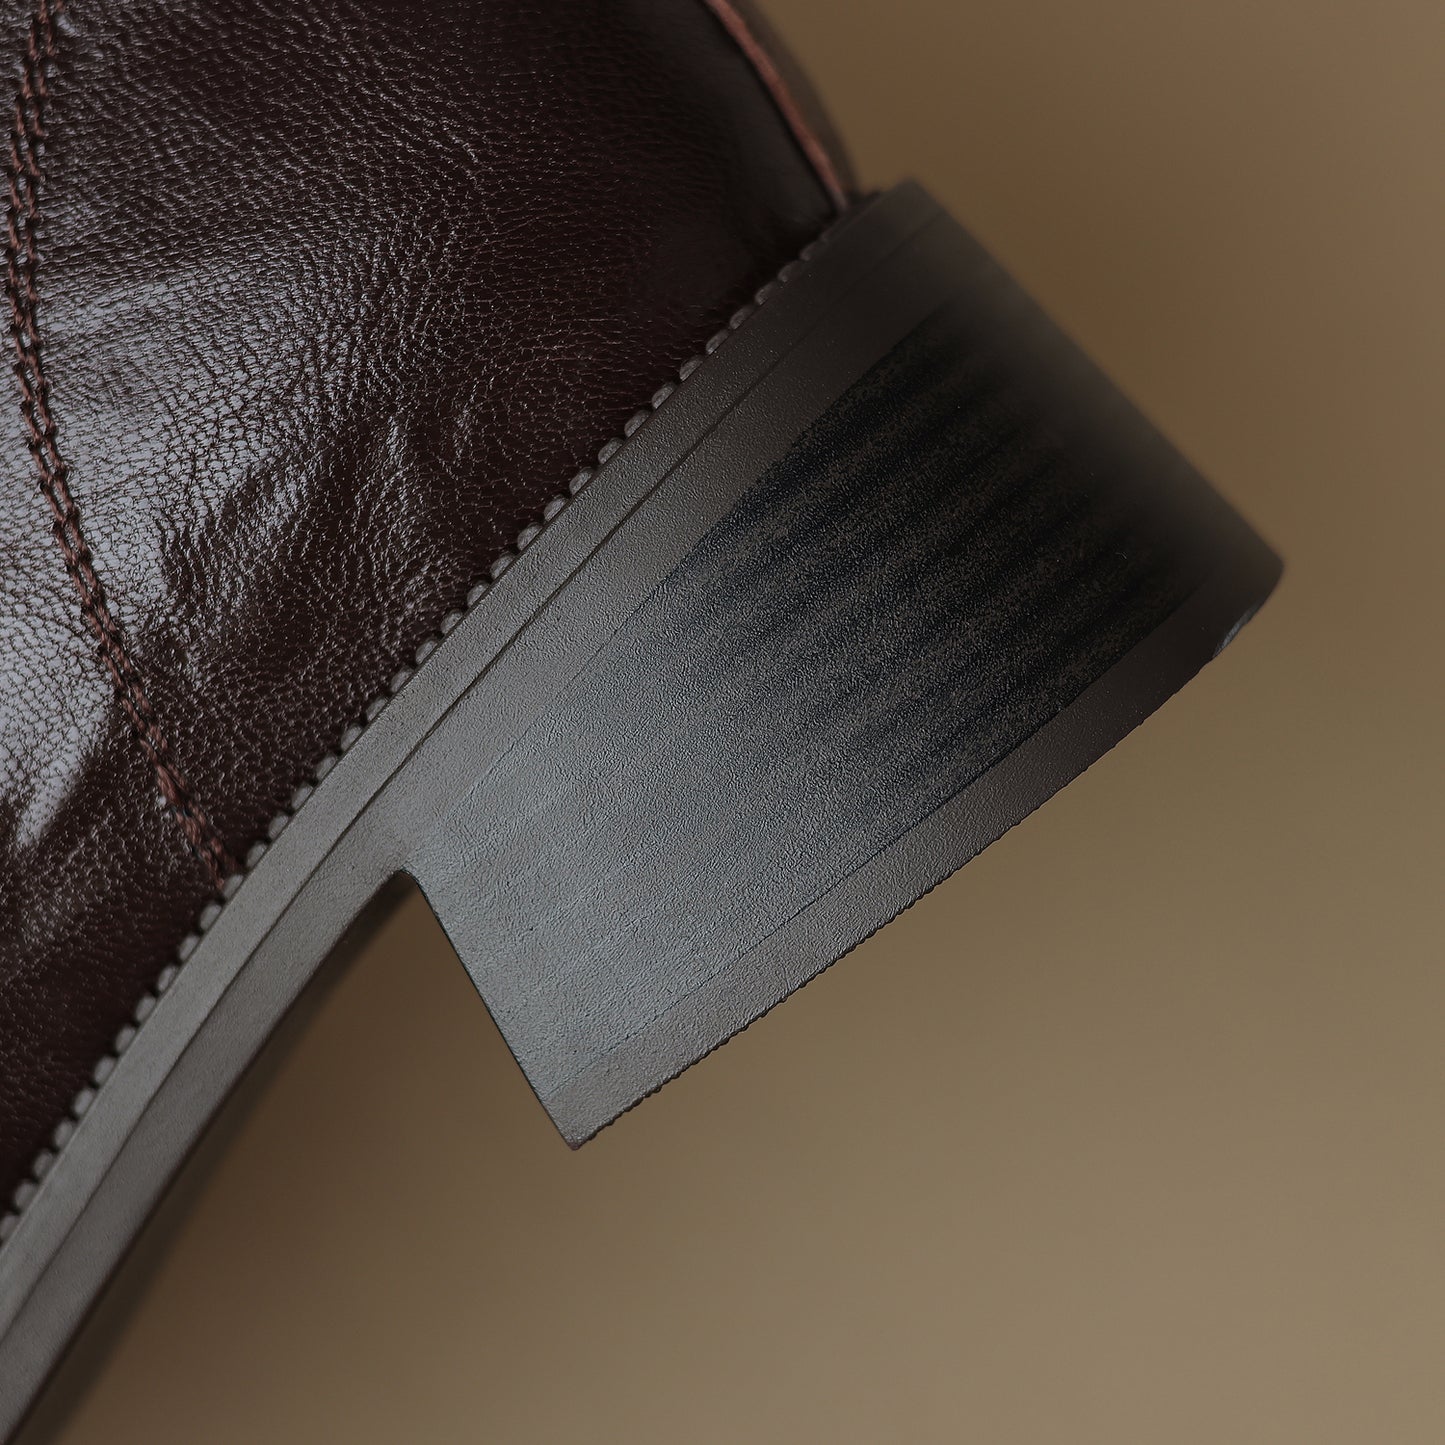 TinaCus Side Zip Up Women's Genuine Leather Block Heel Handmade Ankle Boots